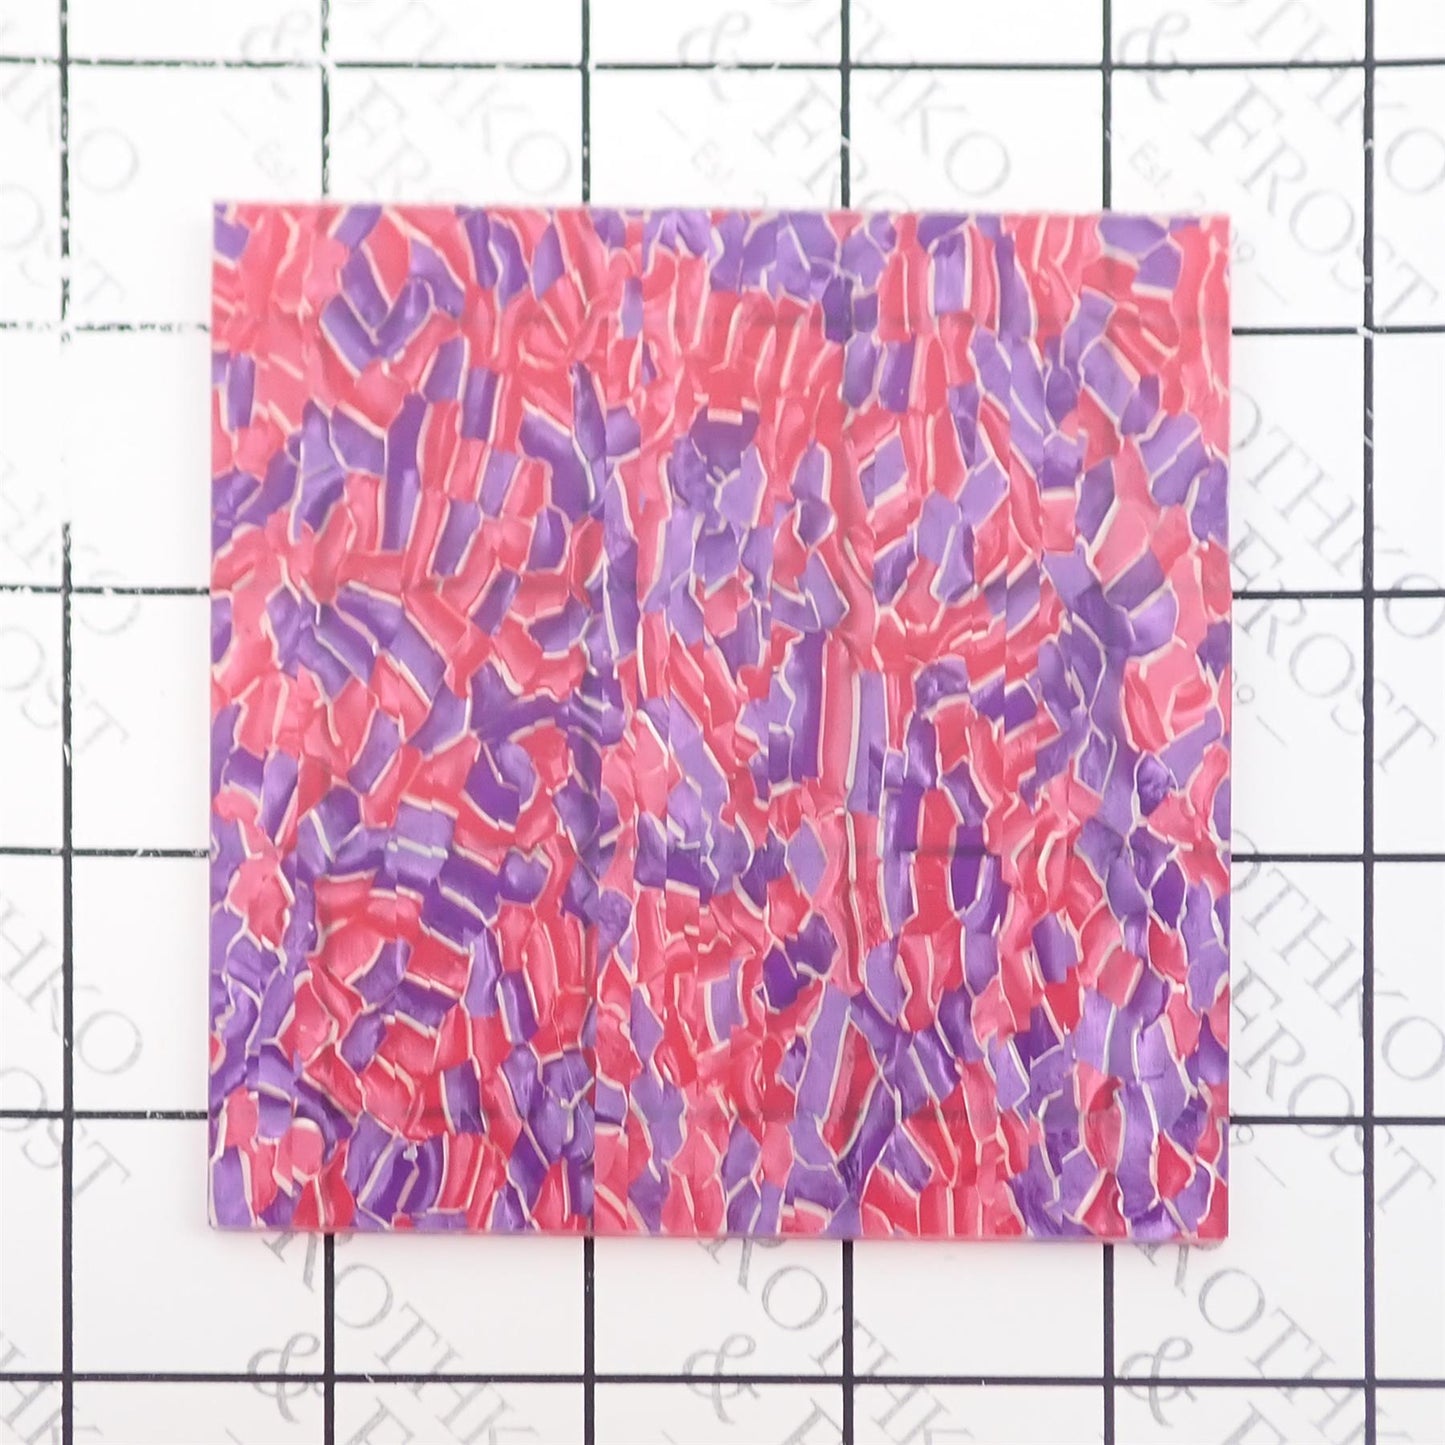 Incudo Purple Crackle Celluloid Laminate Acrylic Sheet - 300x200x3mm (11.8x7.87x0.12")